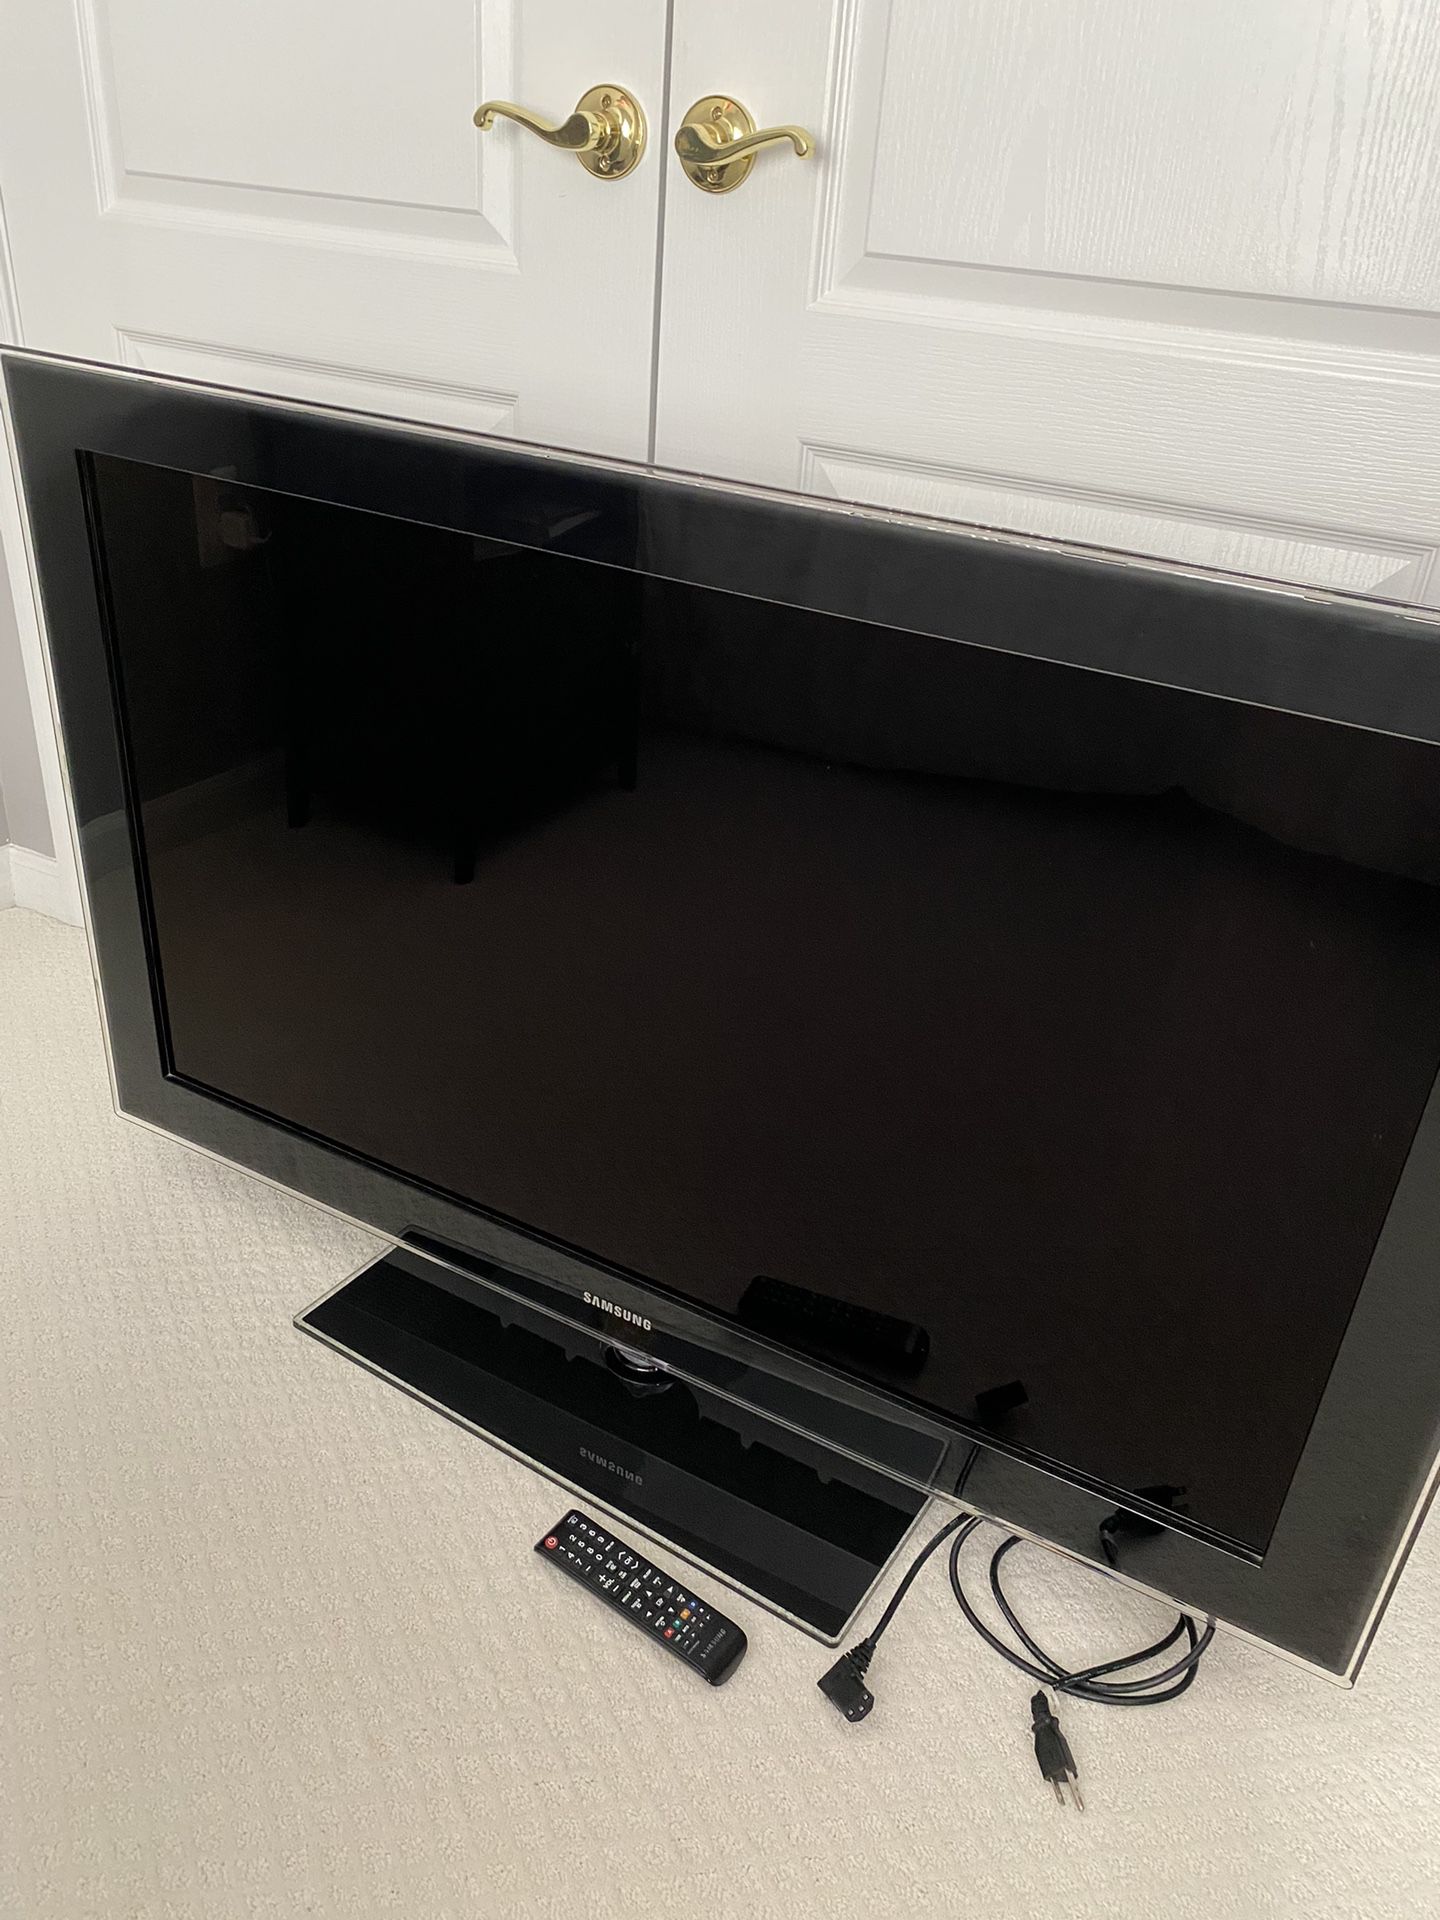 45 Inch Samsung Flatscreen TV